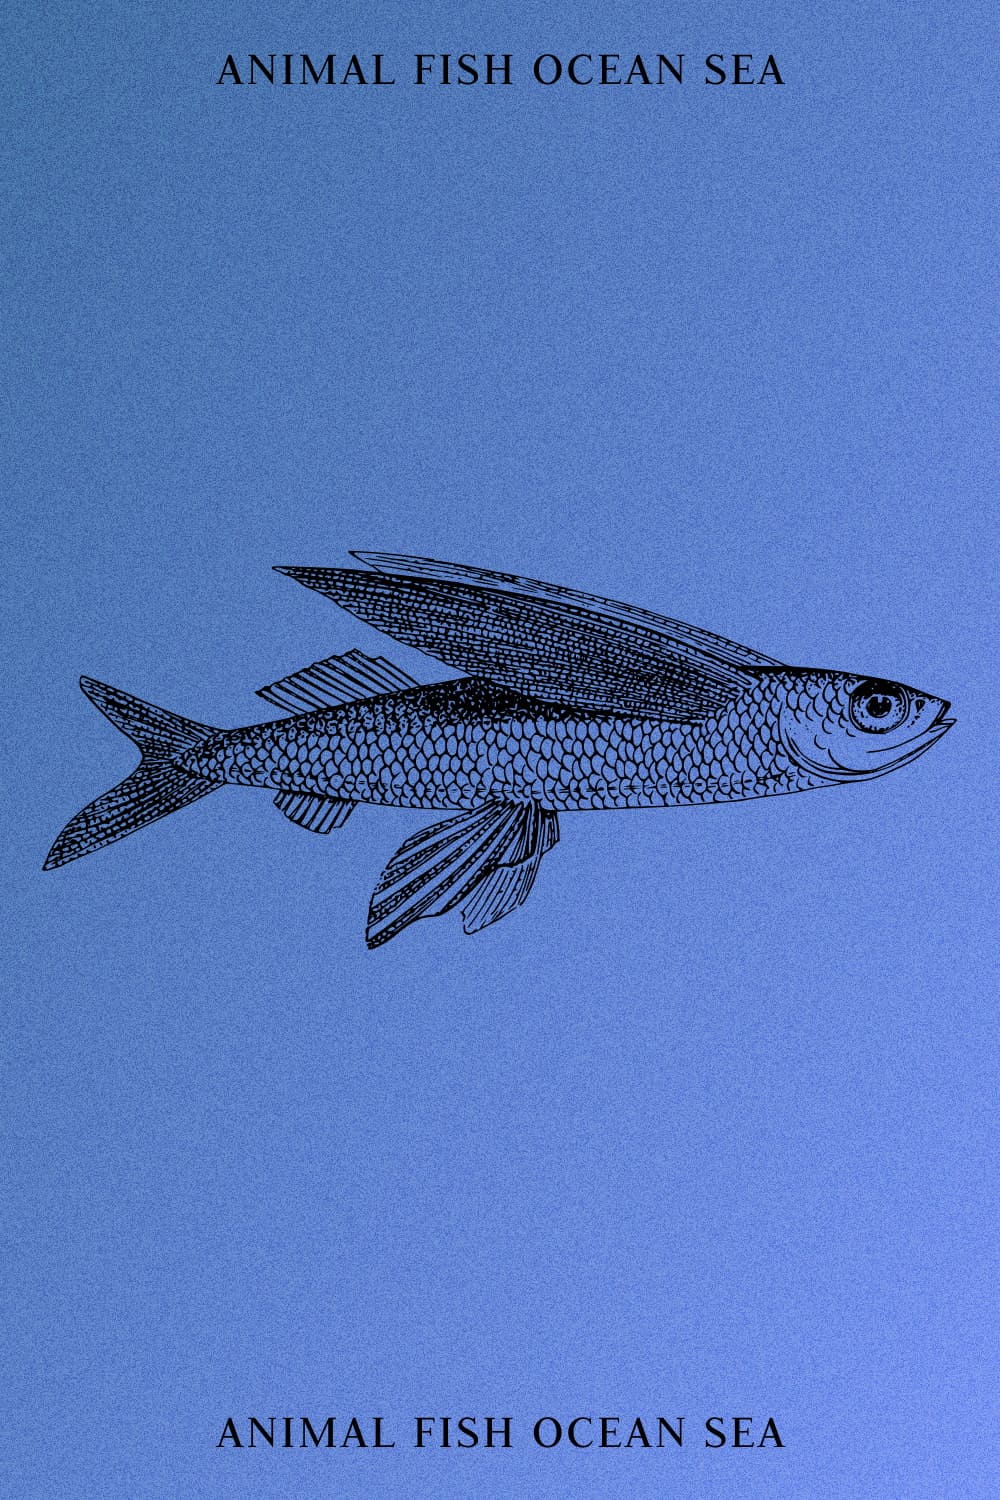 Animal Fish Ocean Sea - Pinterest Image.